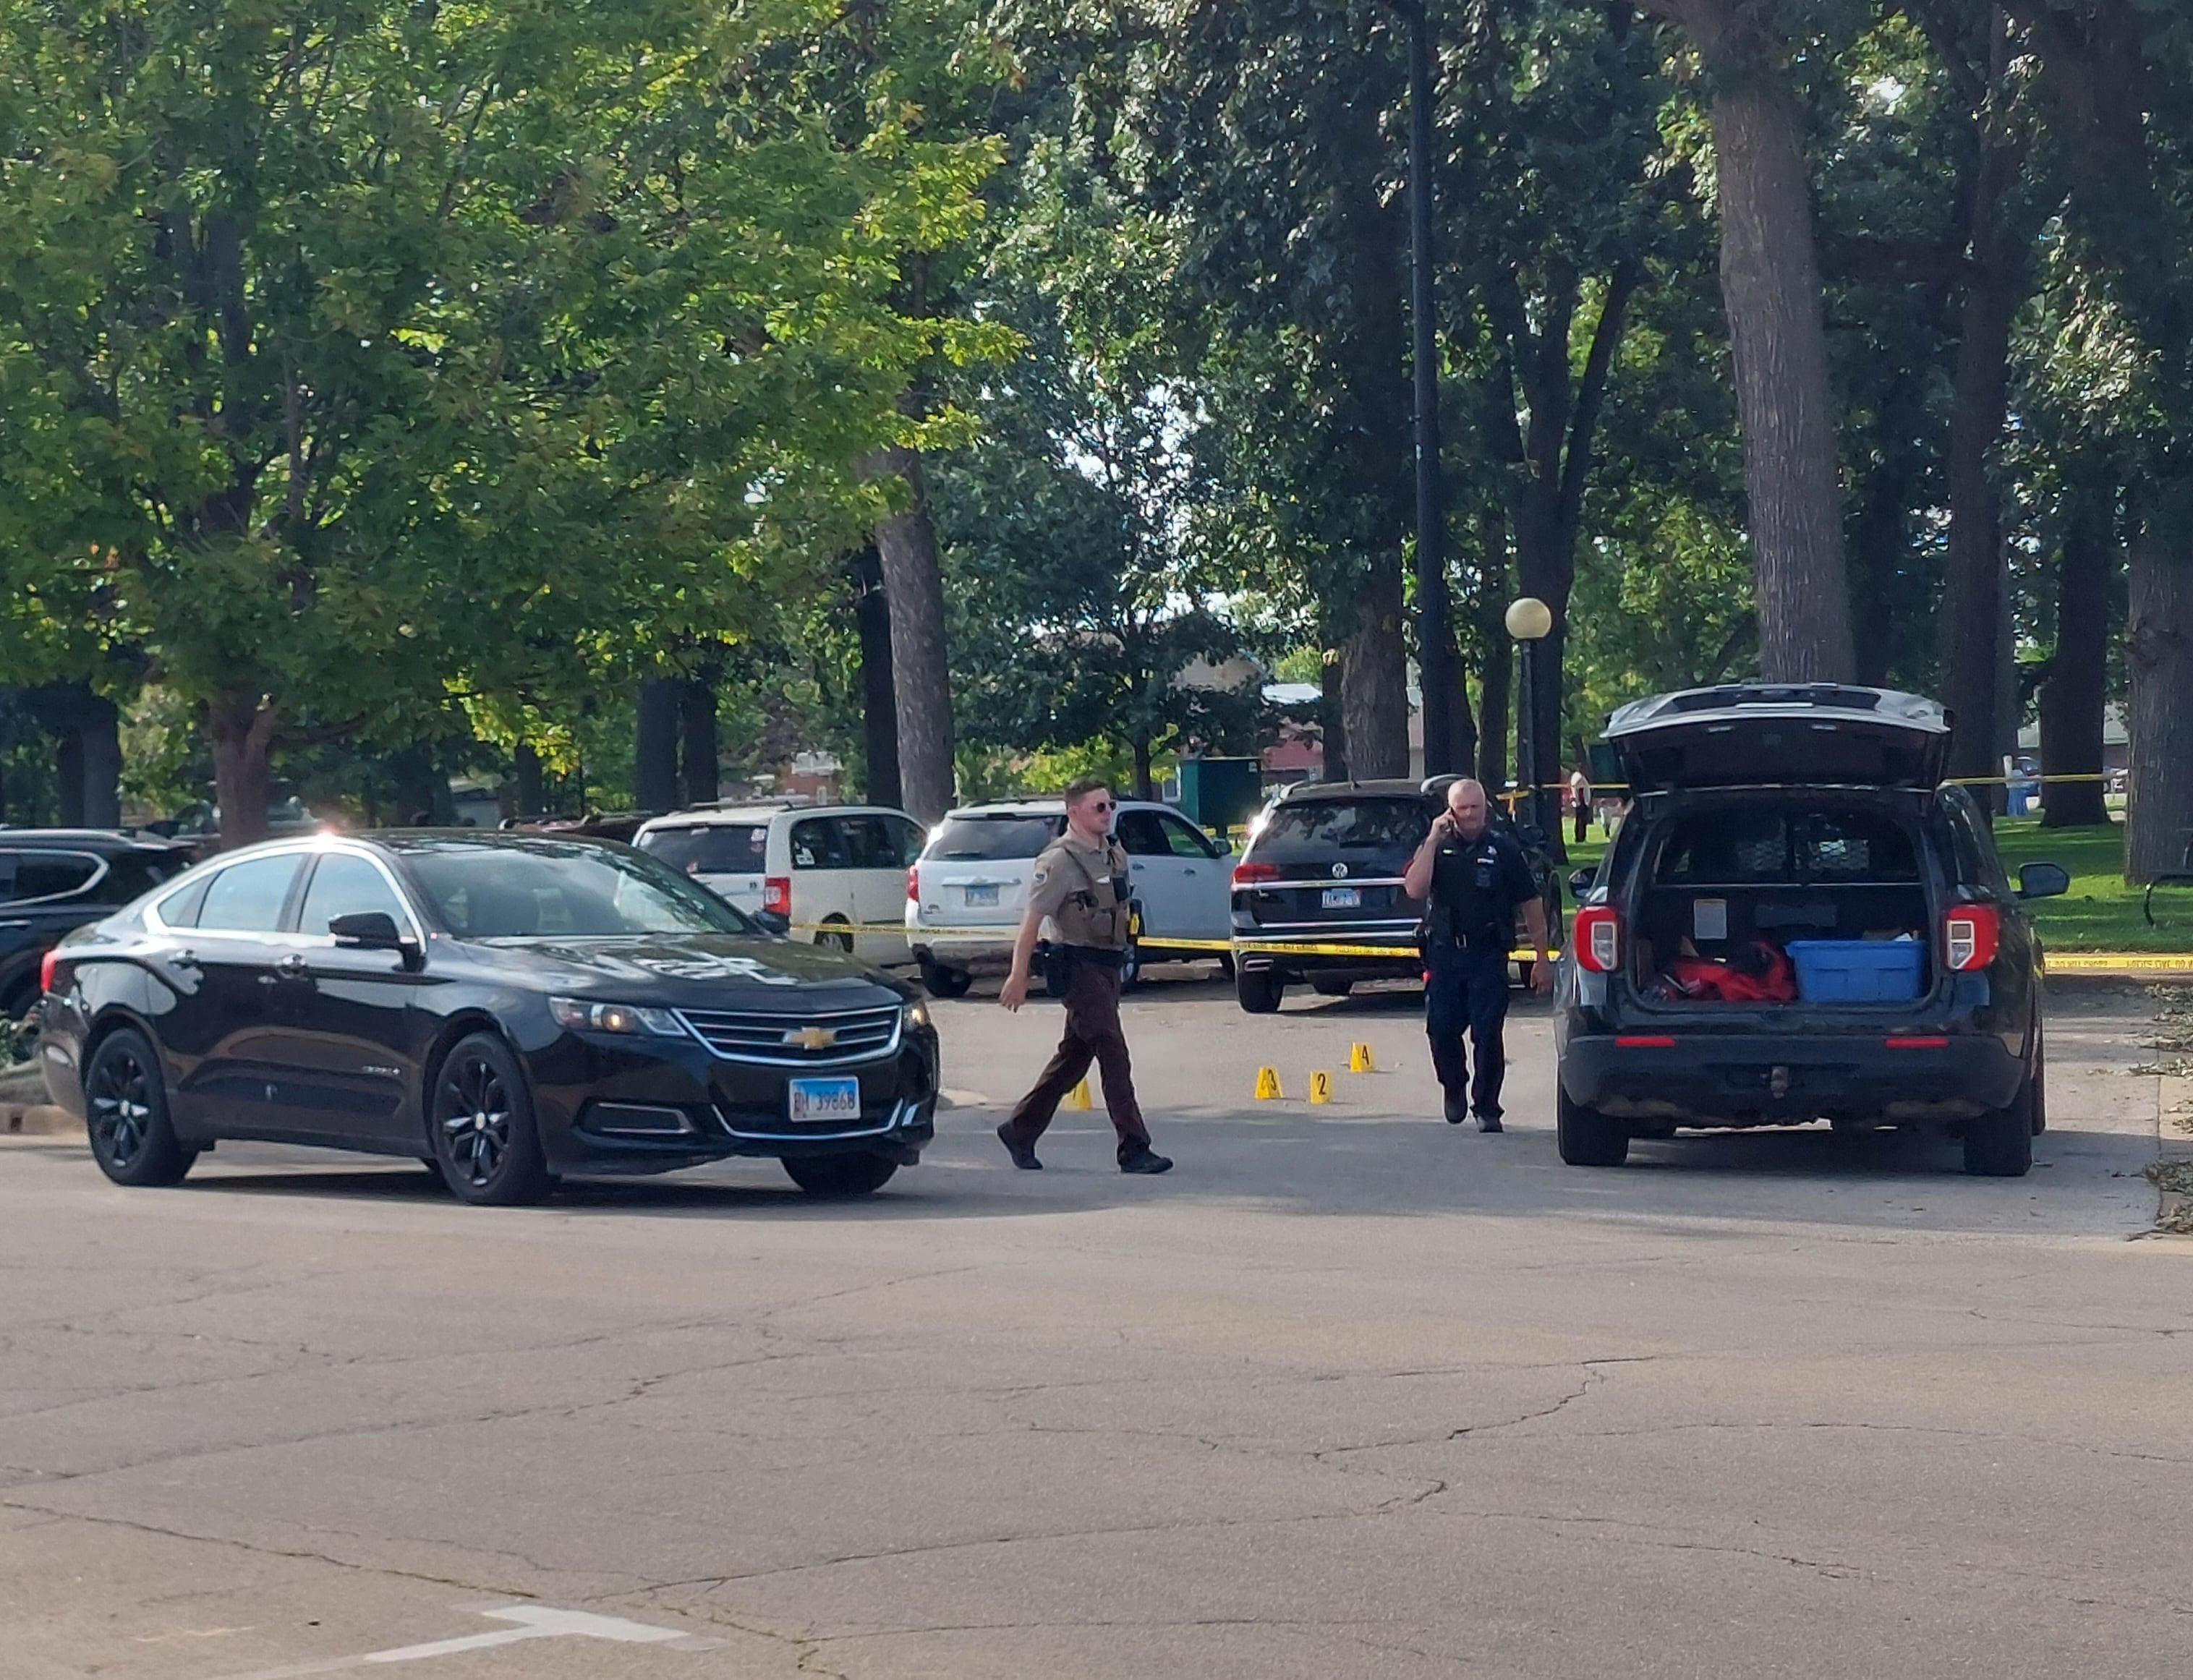 Dispute between 2 men in parking lot led to Streator shooting, police say